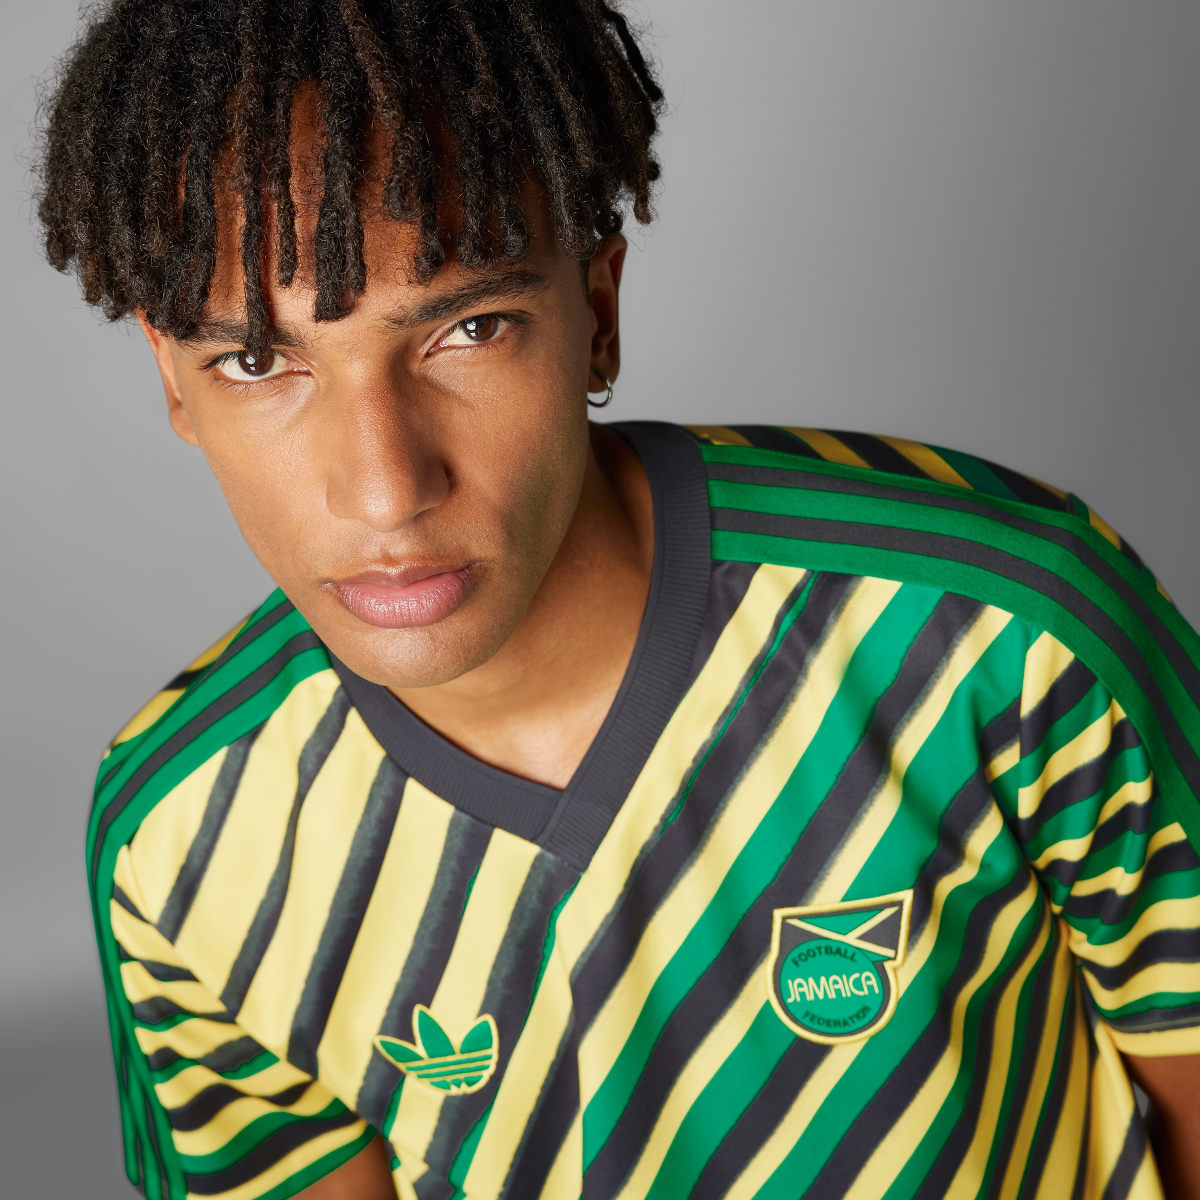 Adidas Koszulka Jamaica Trefoil. 8